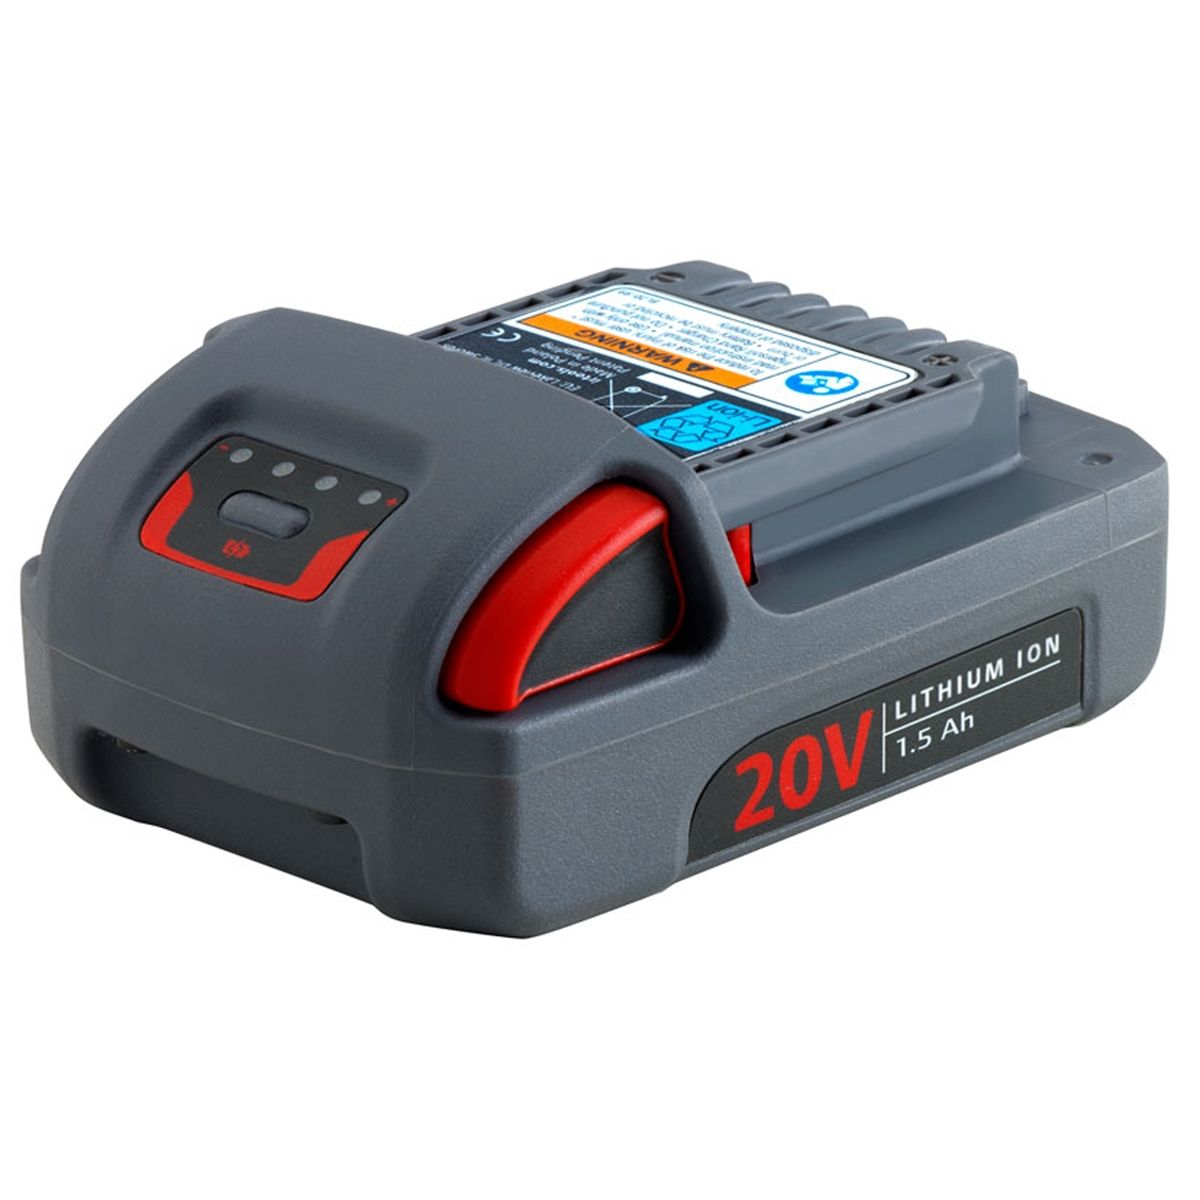 IQv20 Lithium-Ion Battery Slim Pack 20V 1.5Ah